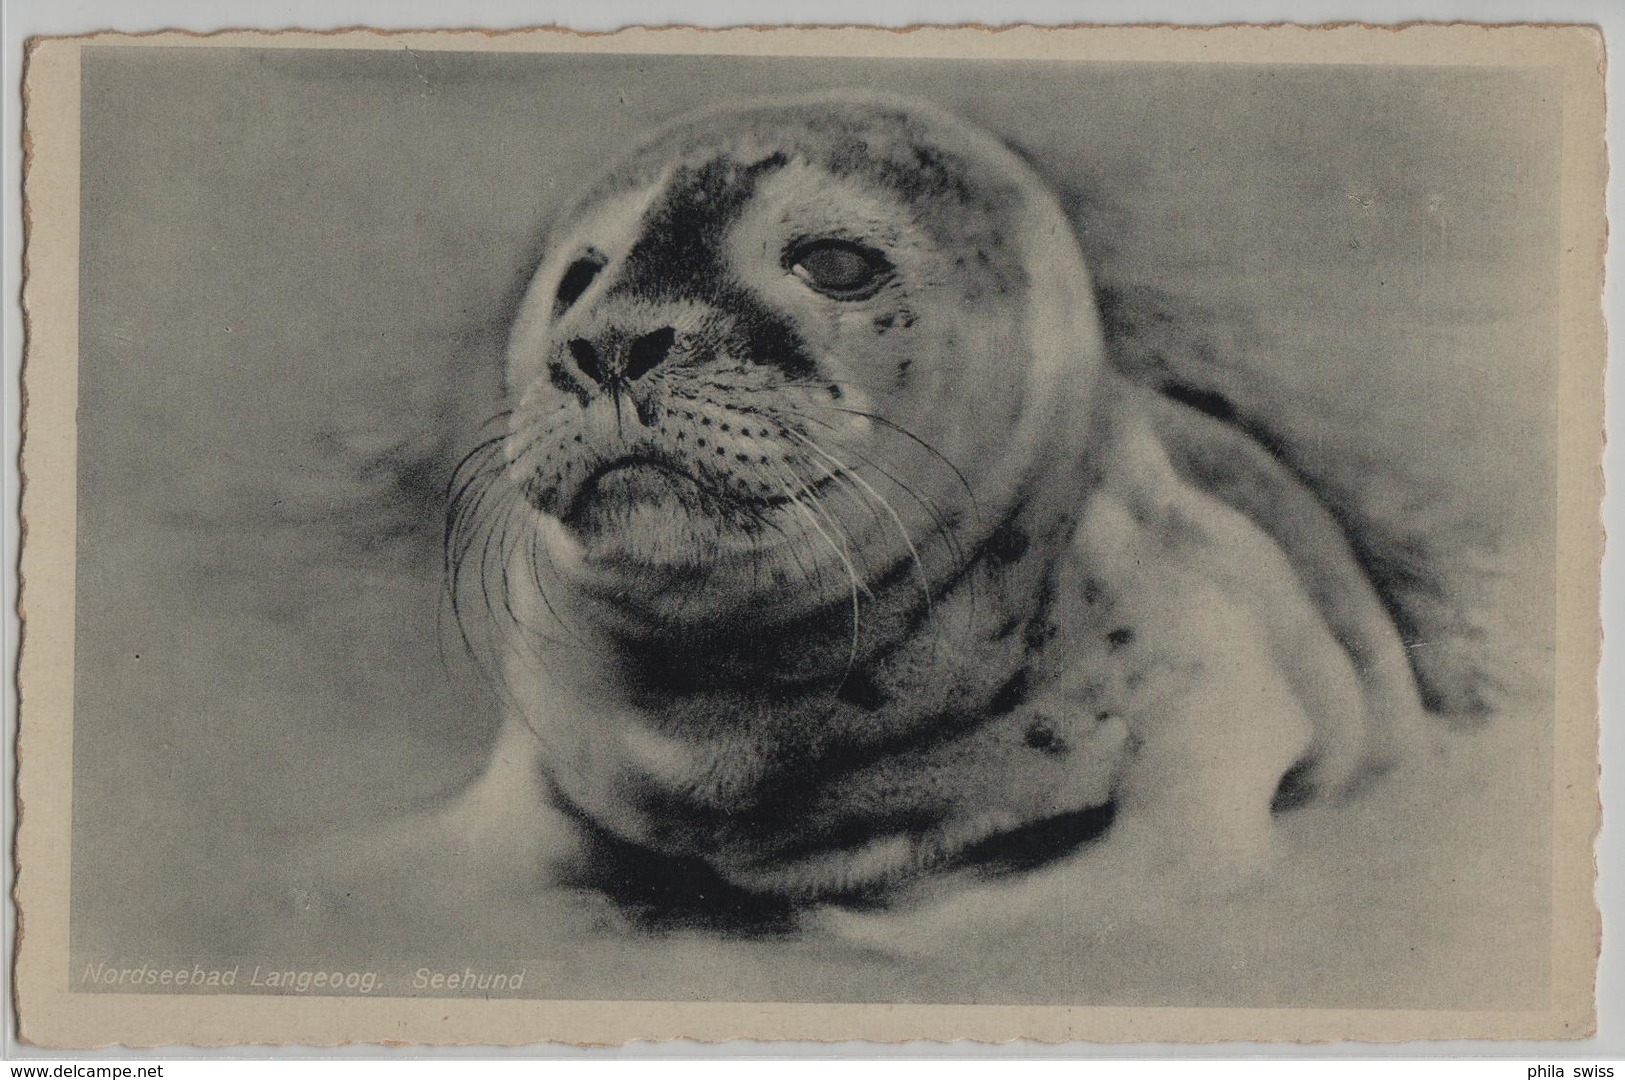 Nordseebad Langeoog - Seehund Seal - Photo: Oskar Meyer - Langeoog